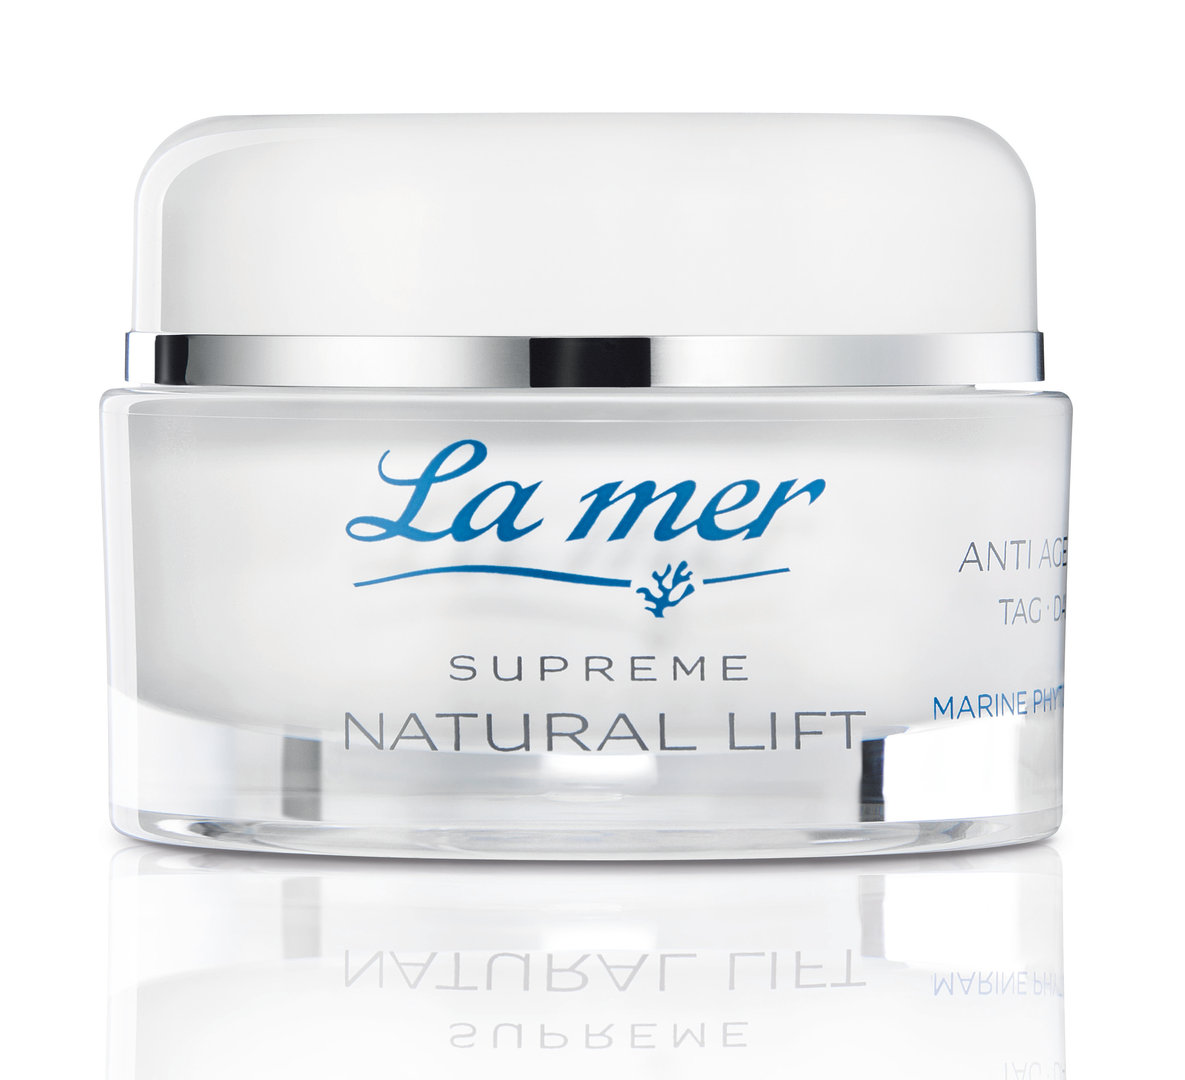 La mer Supreme Natural Lift Anti Age Cream Tag 50 ml, mit Parfum